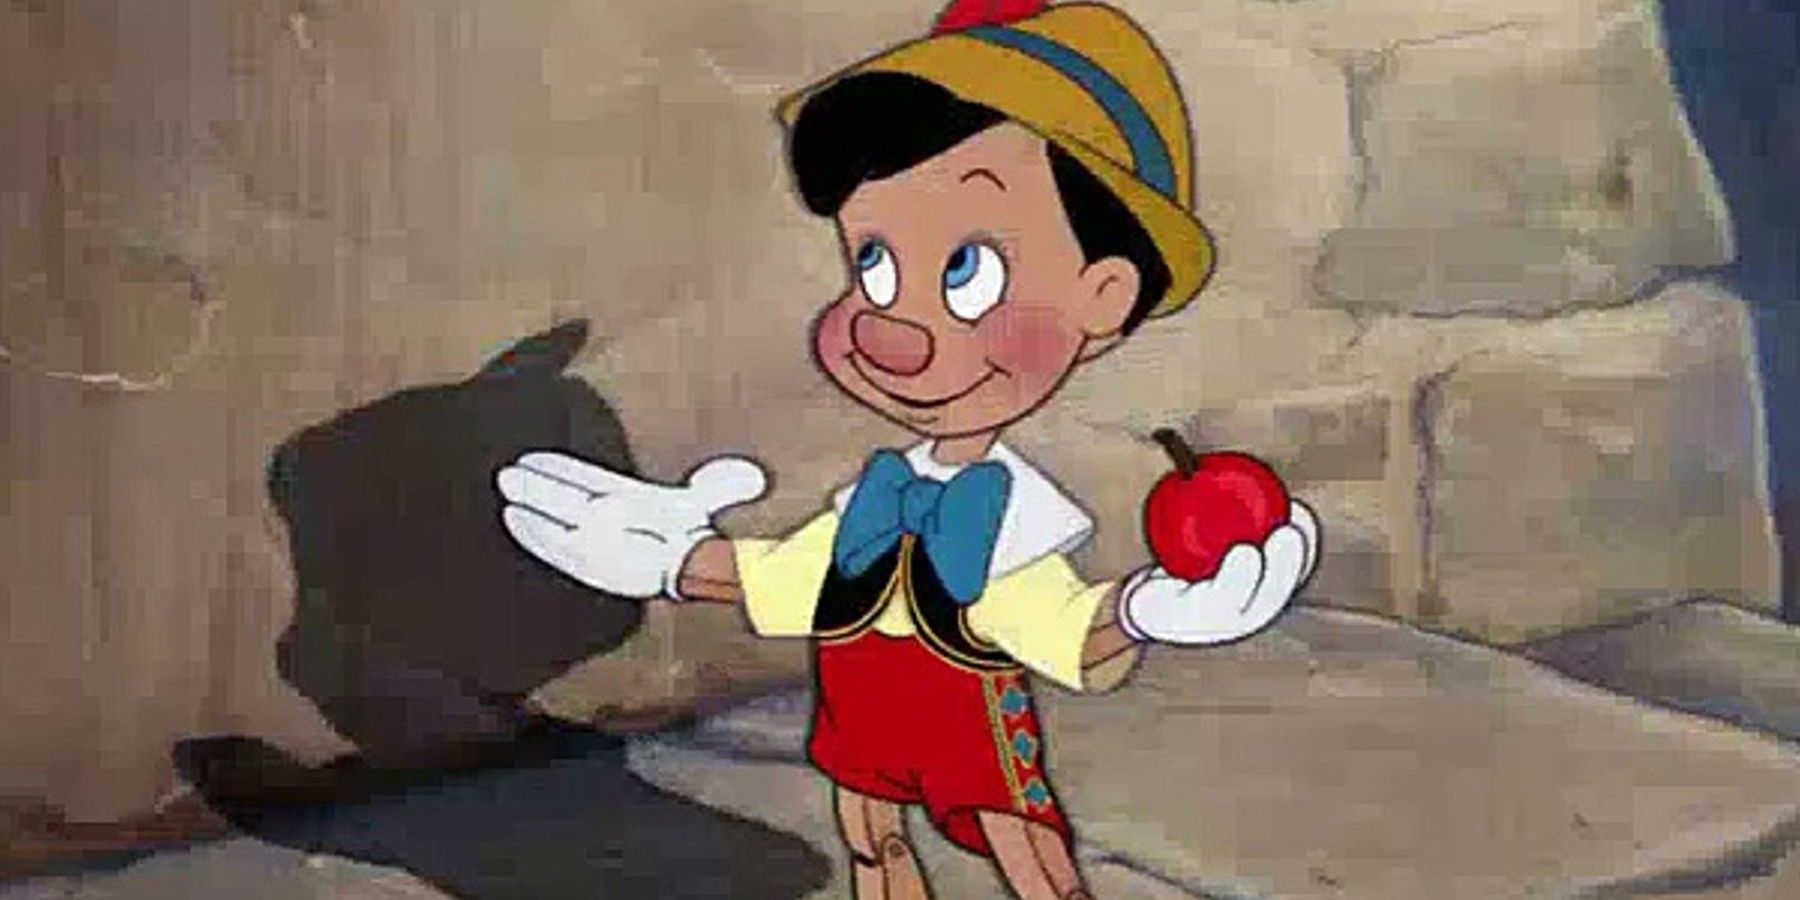 Pinocchio holding an apple